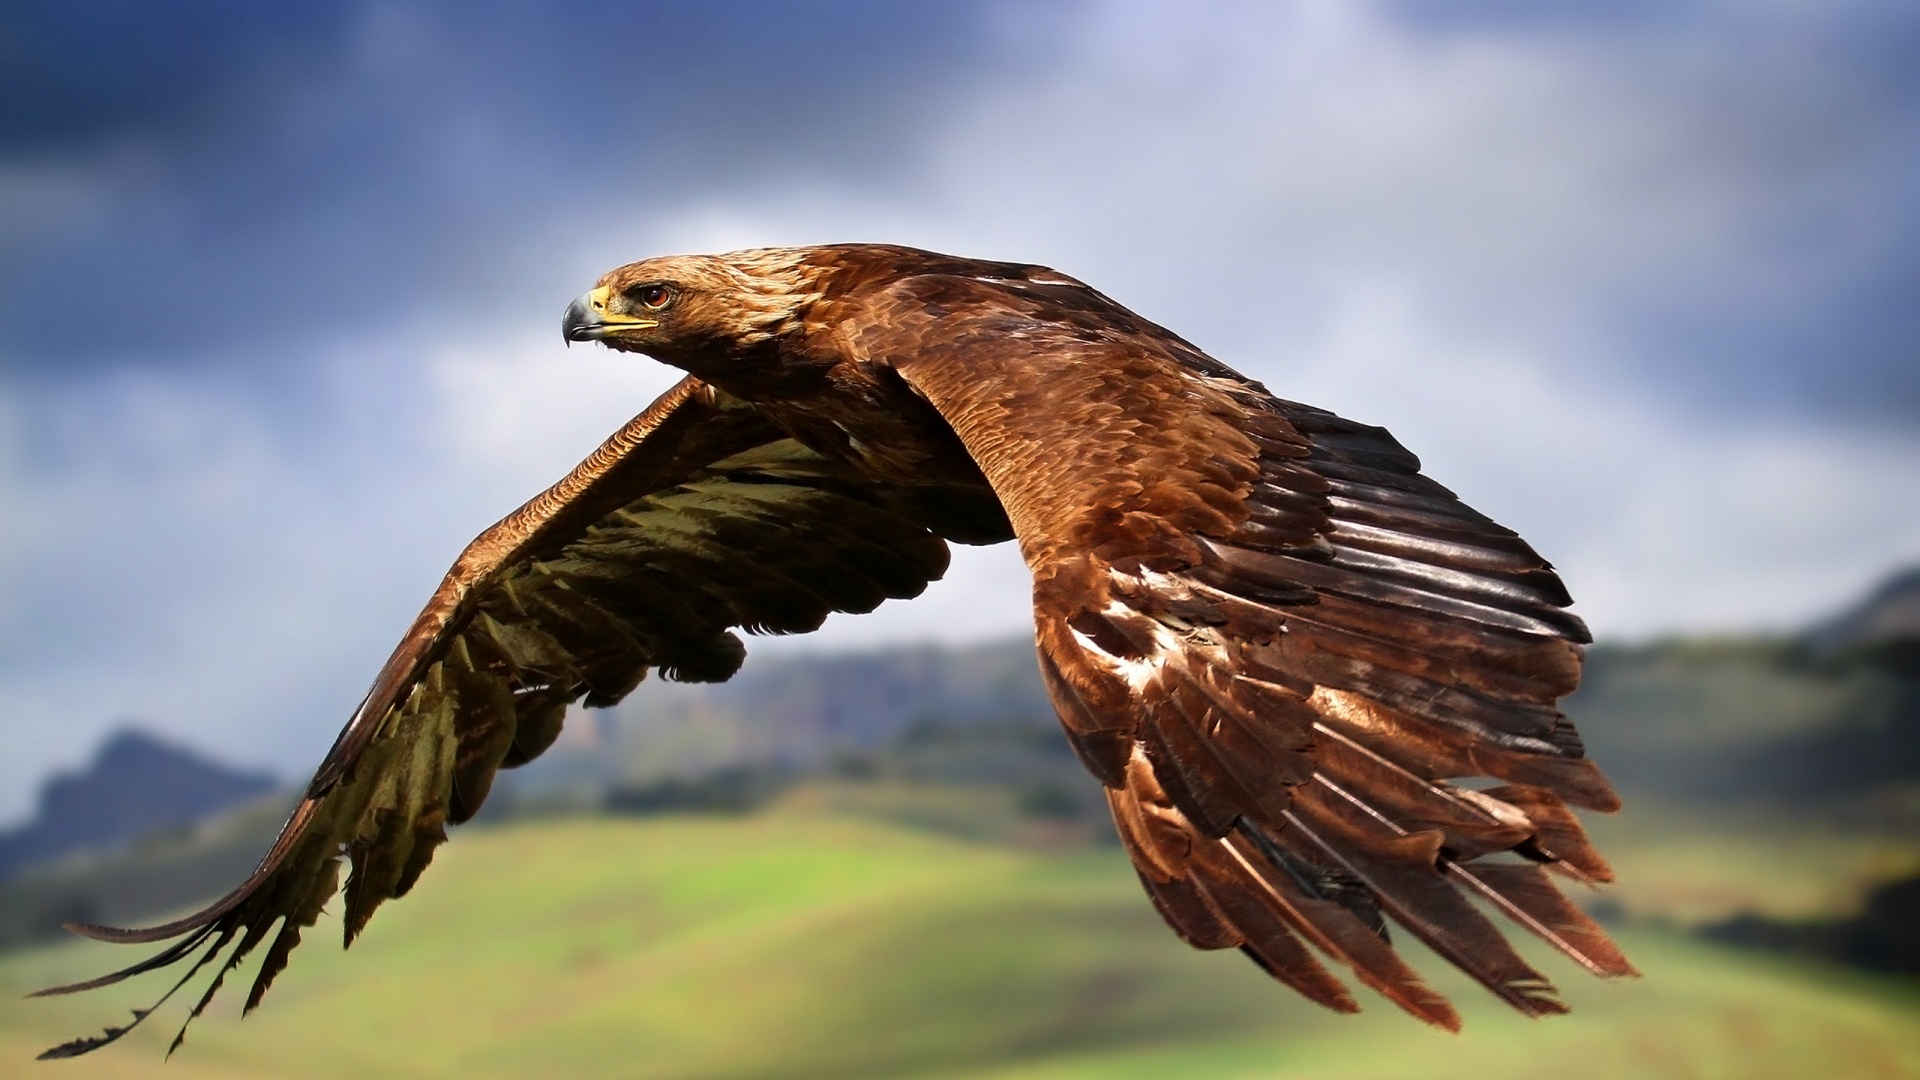 Golden eagle in Flight